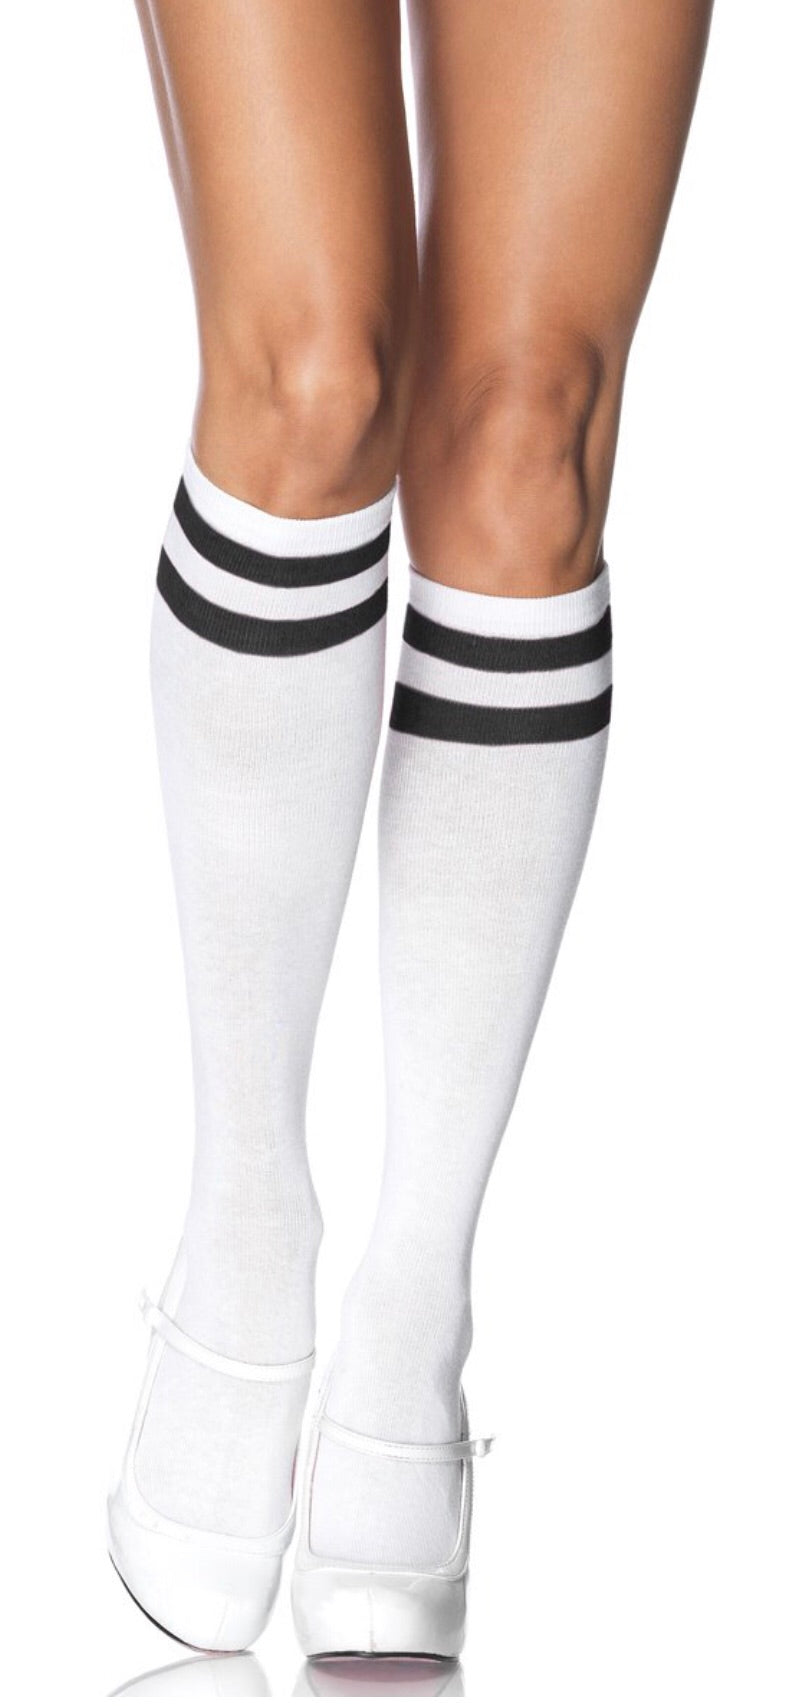 Athletic Knee High Stockings